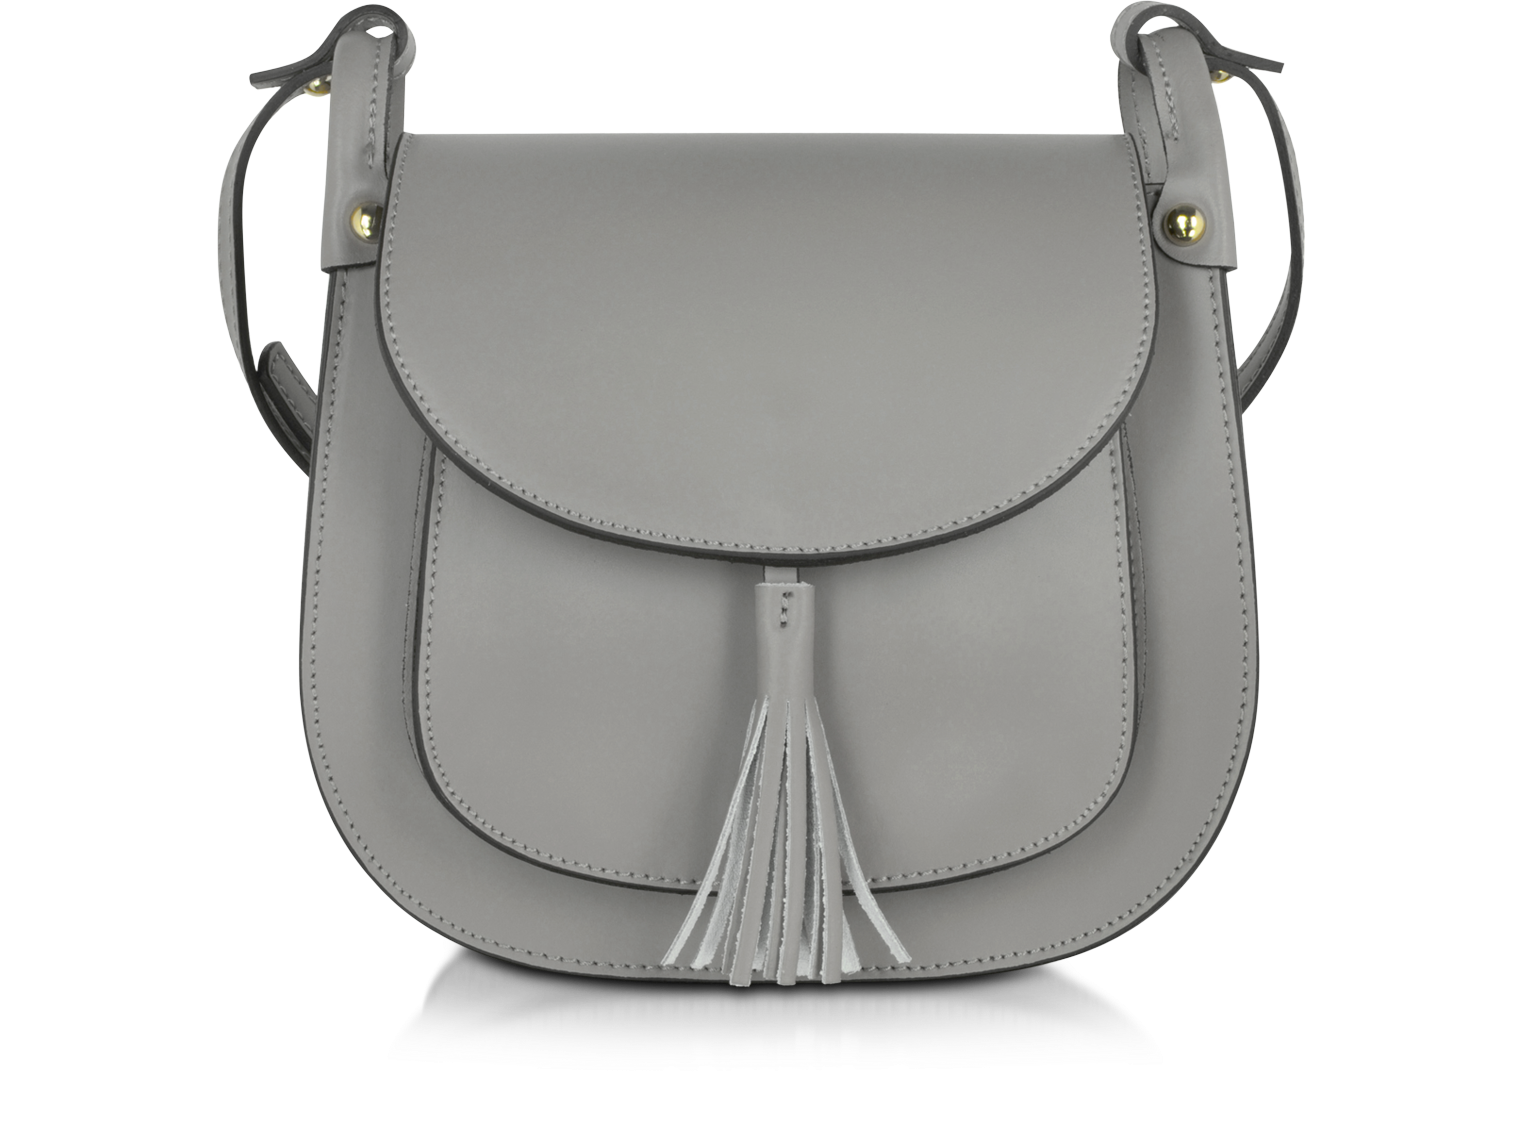 grey leather crossbody bag